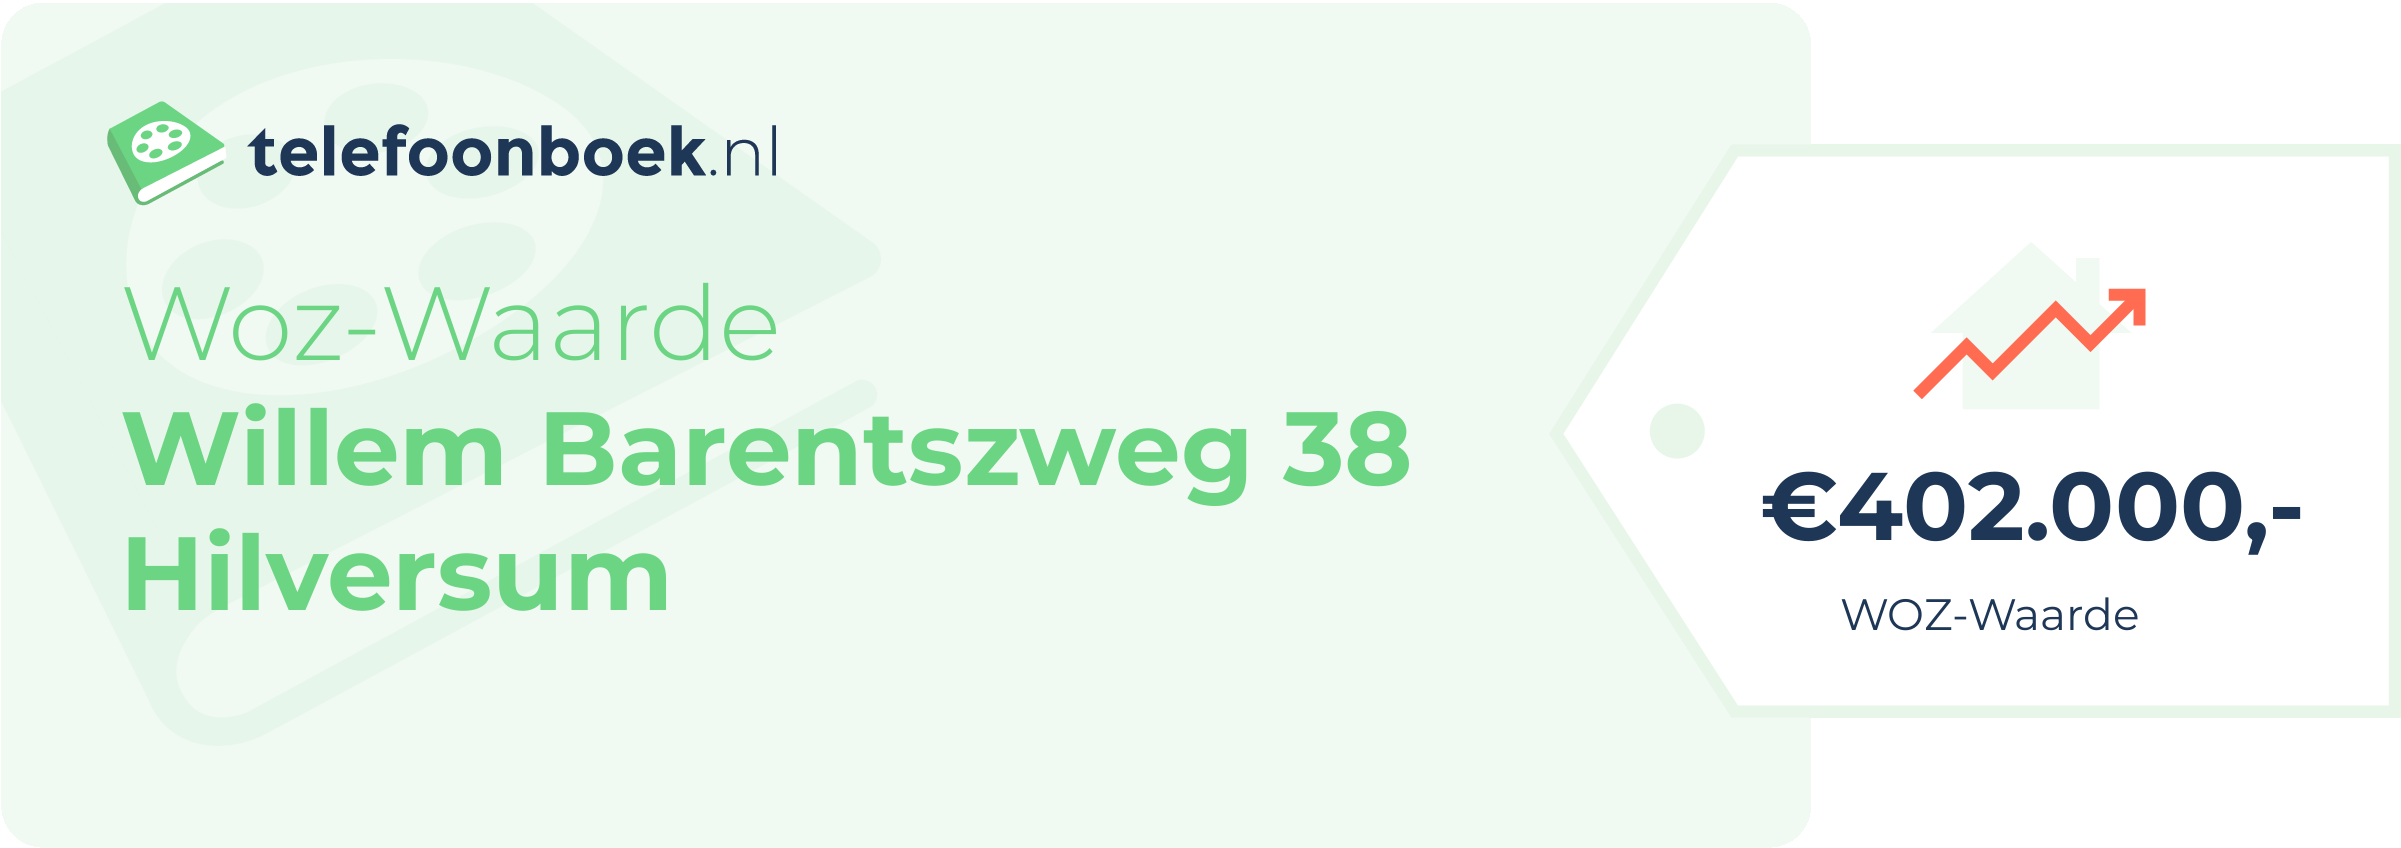 WOZ-waarde Willem Barentszweg 38 Hilversum